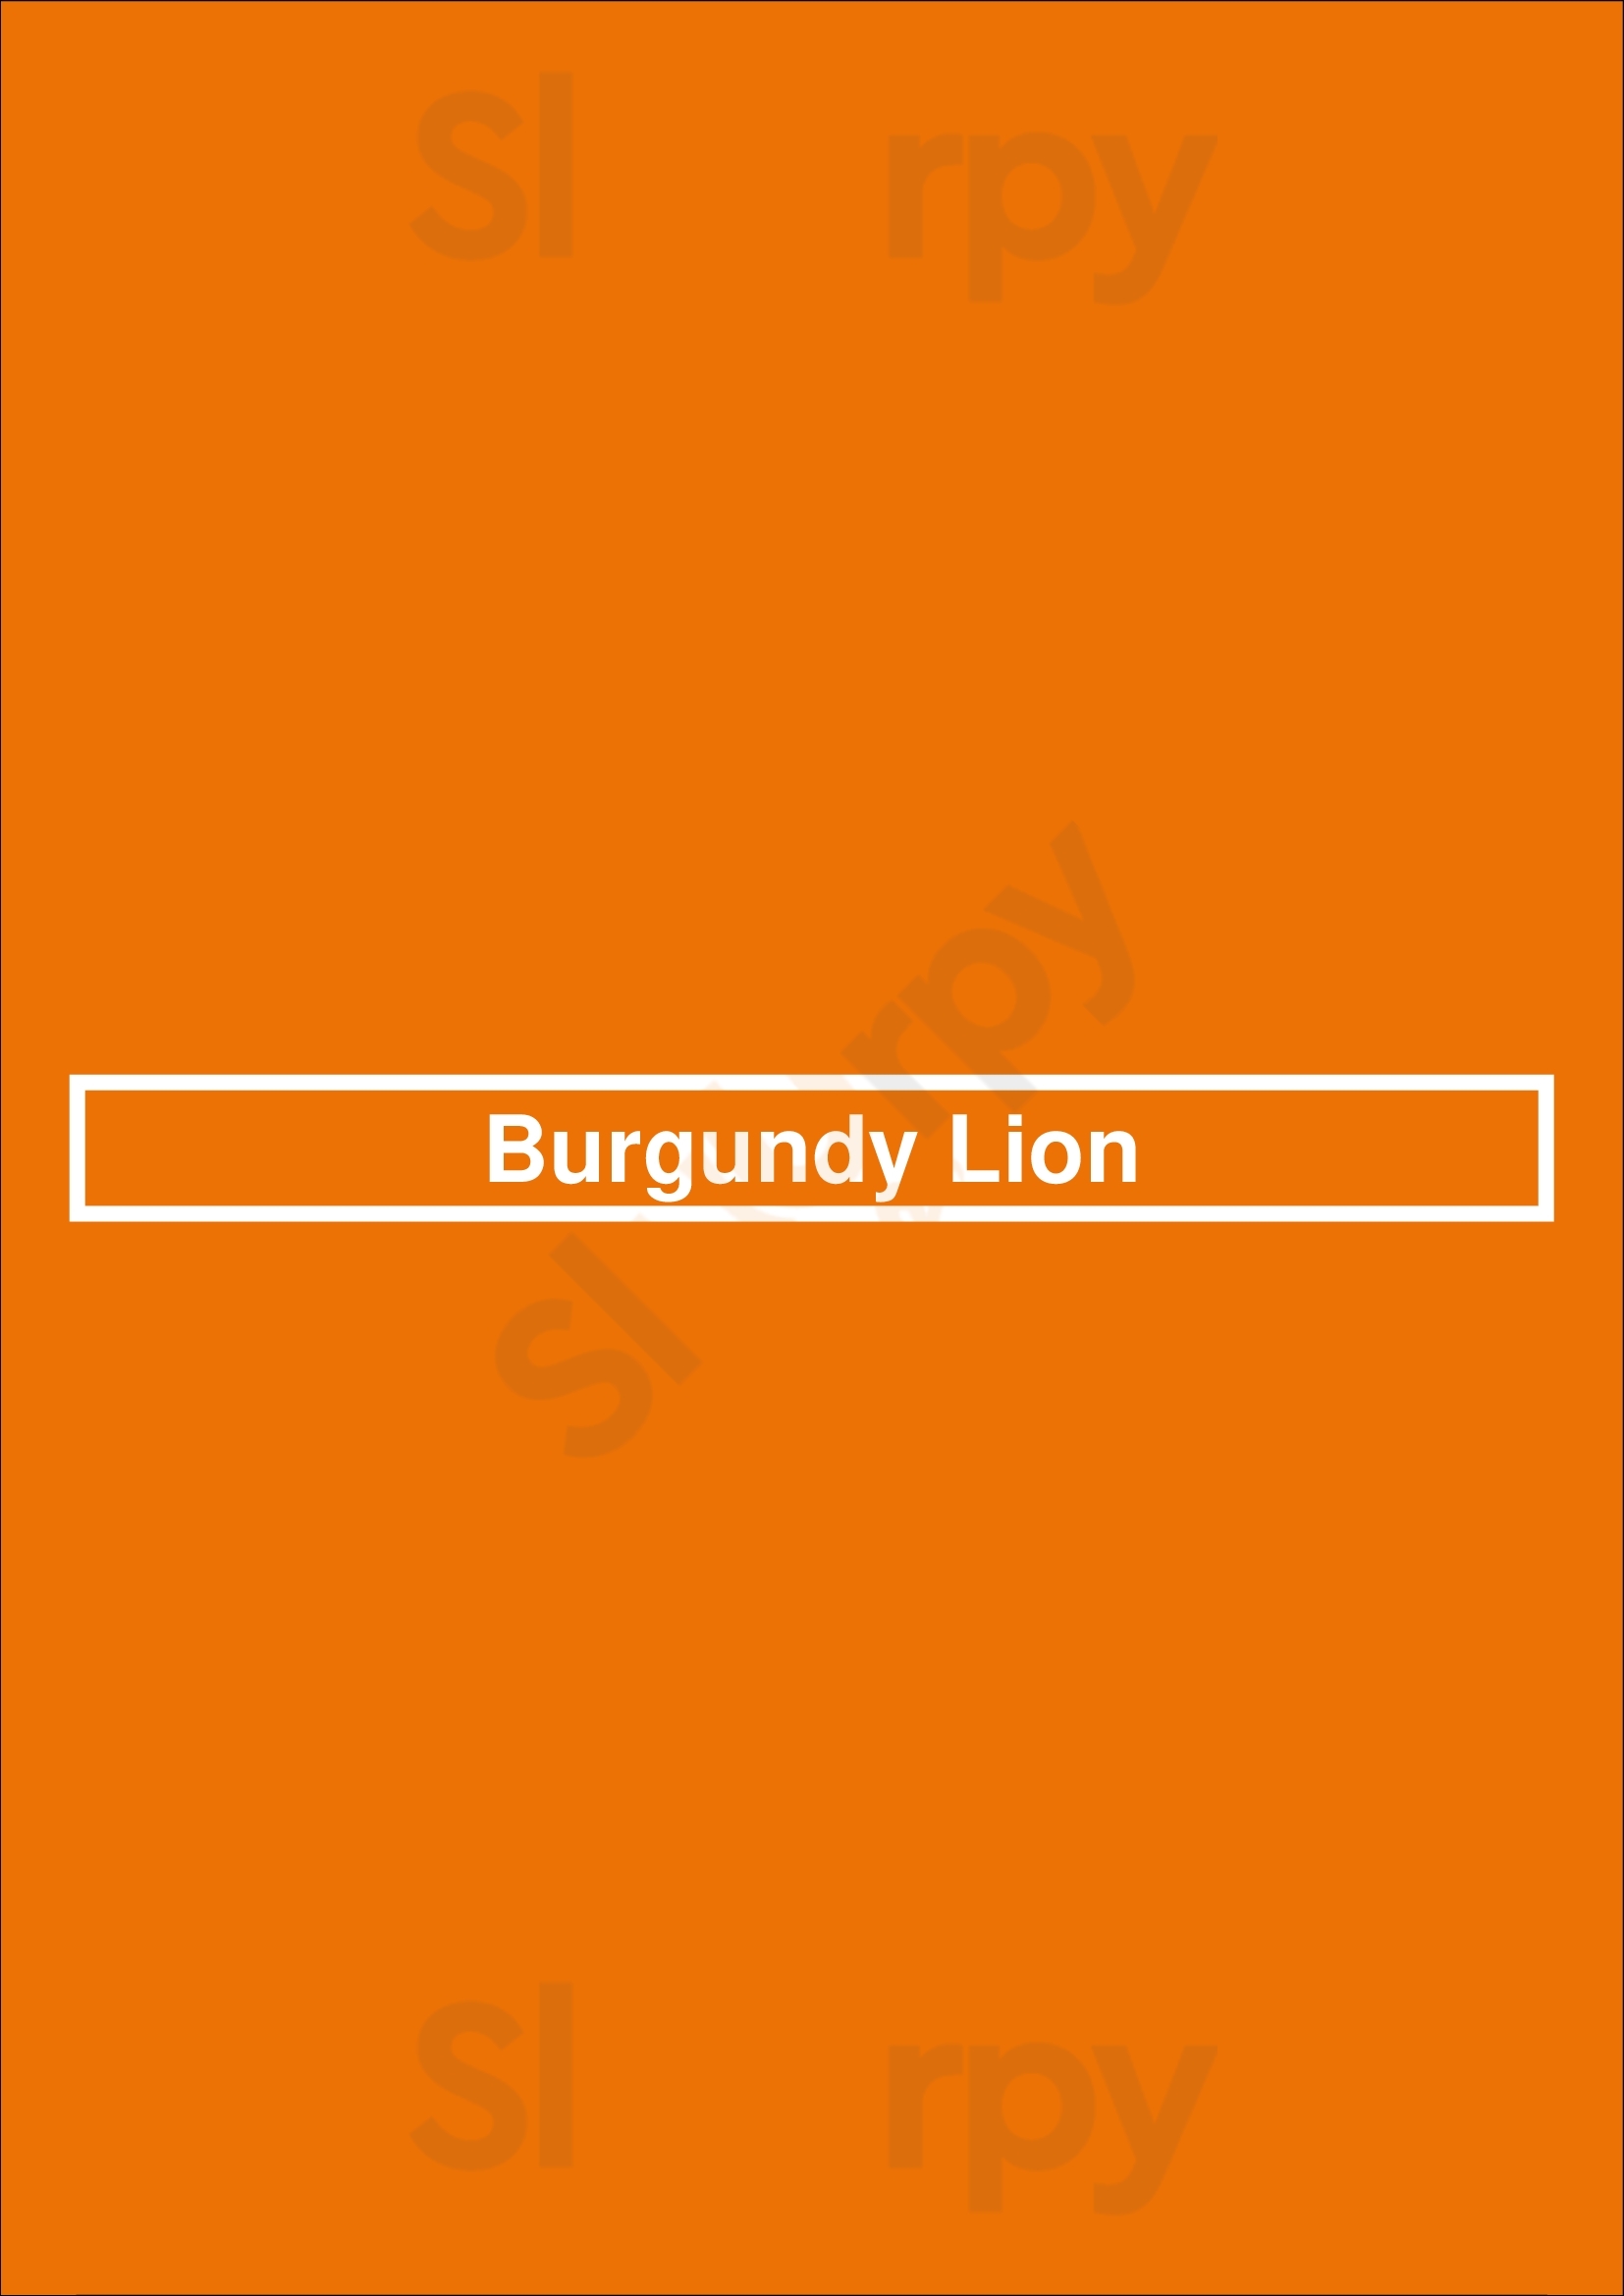 Burgundy Lion Montreal Menu - 1